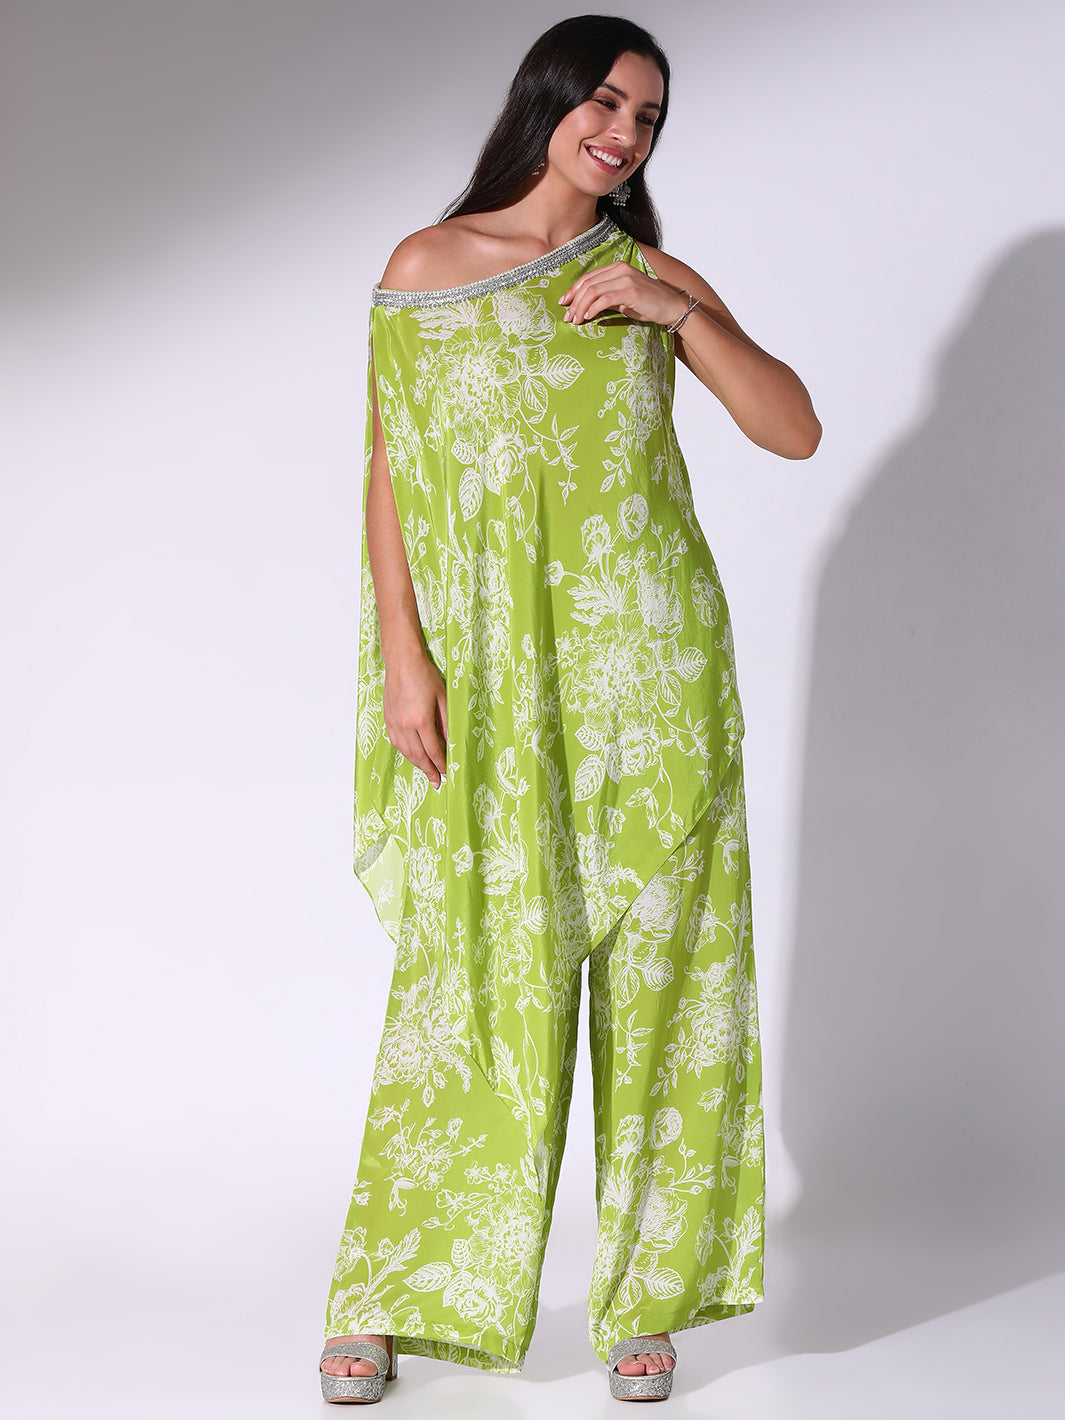 Abercrombie & Fitch Green Dress Pants | Mercari